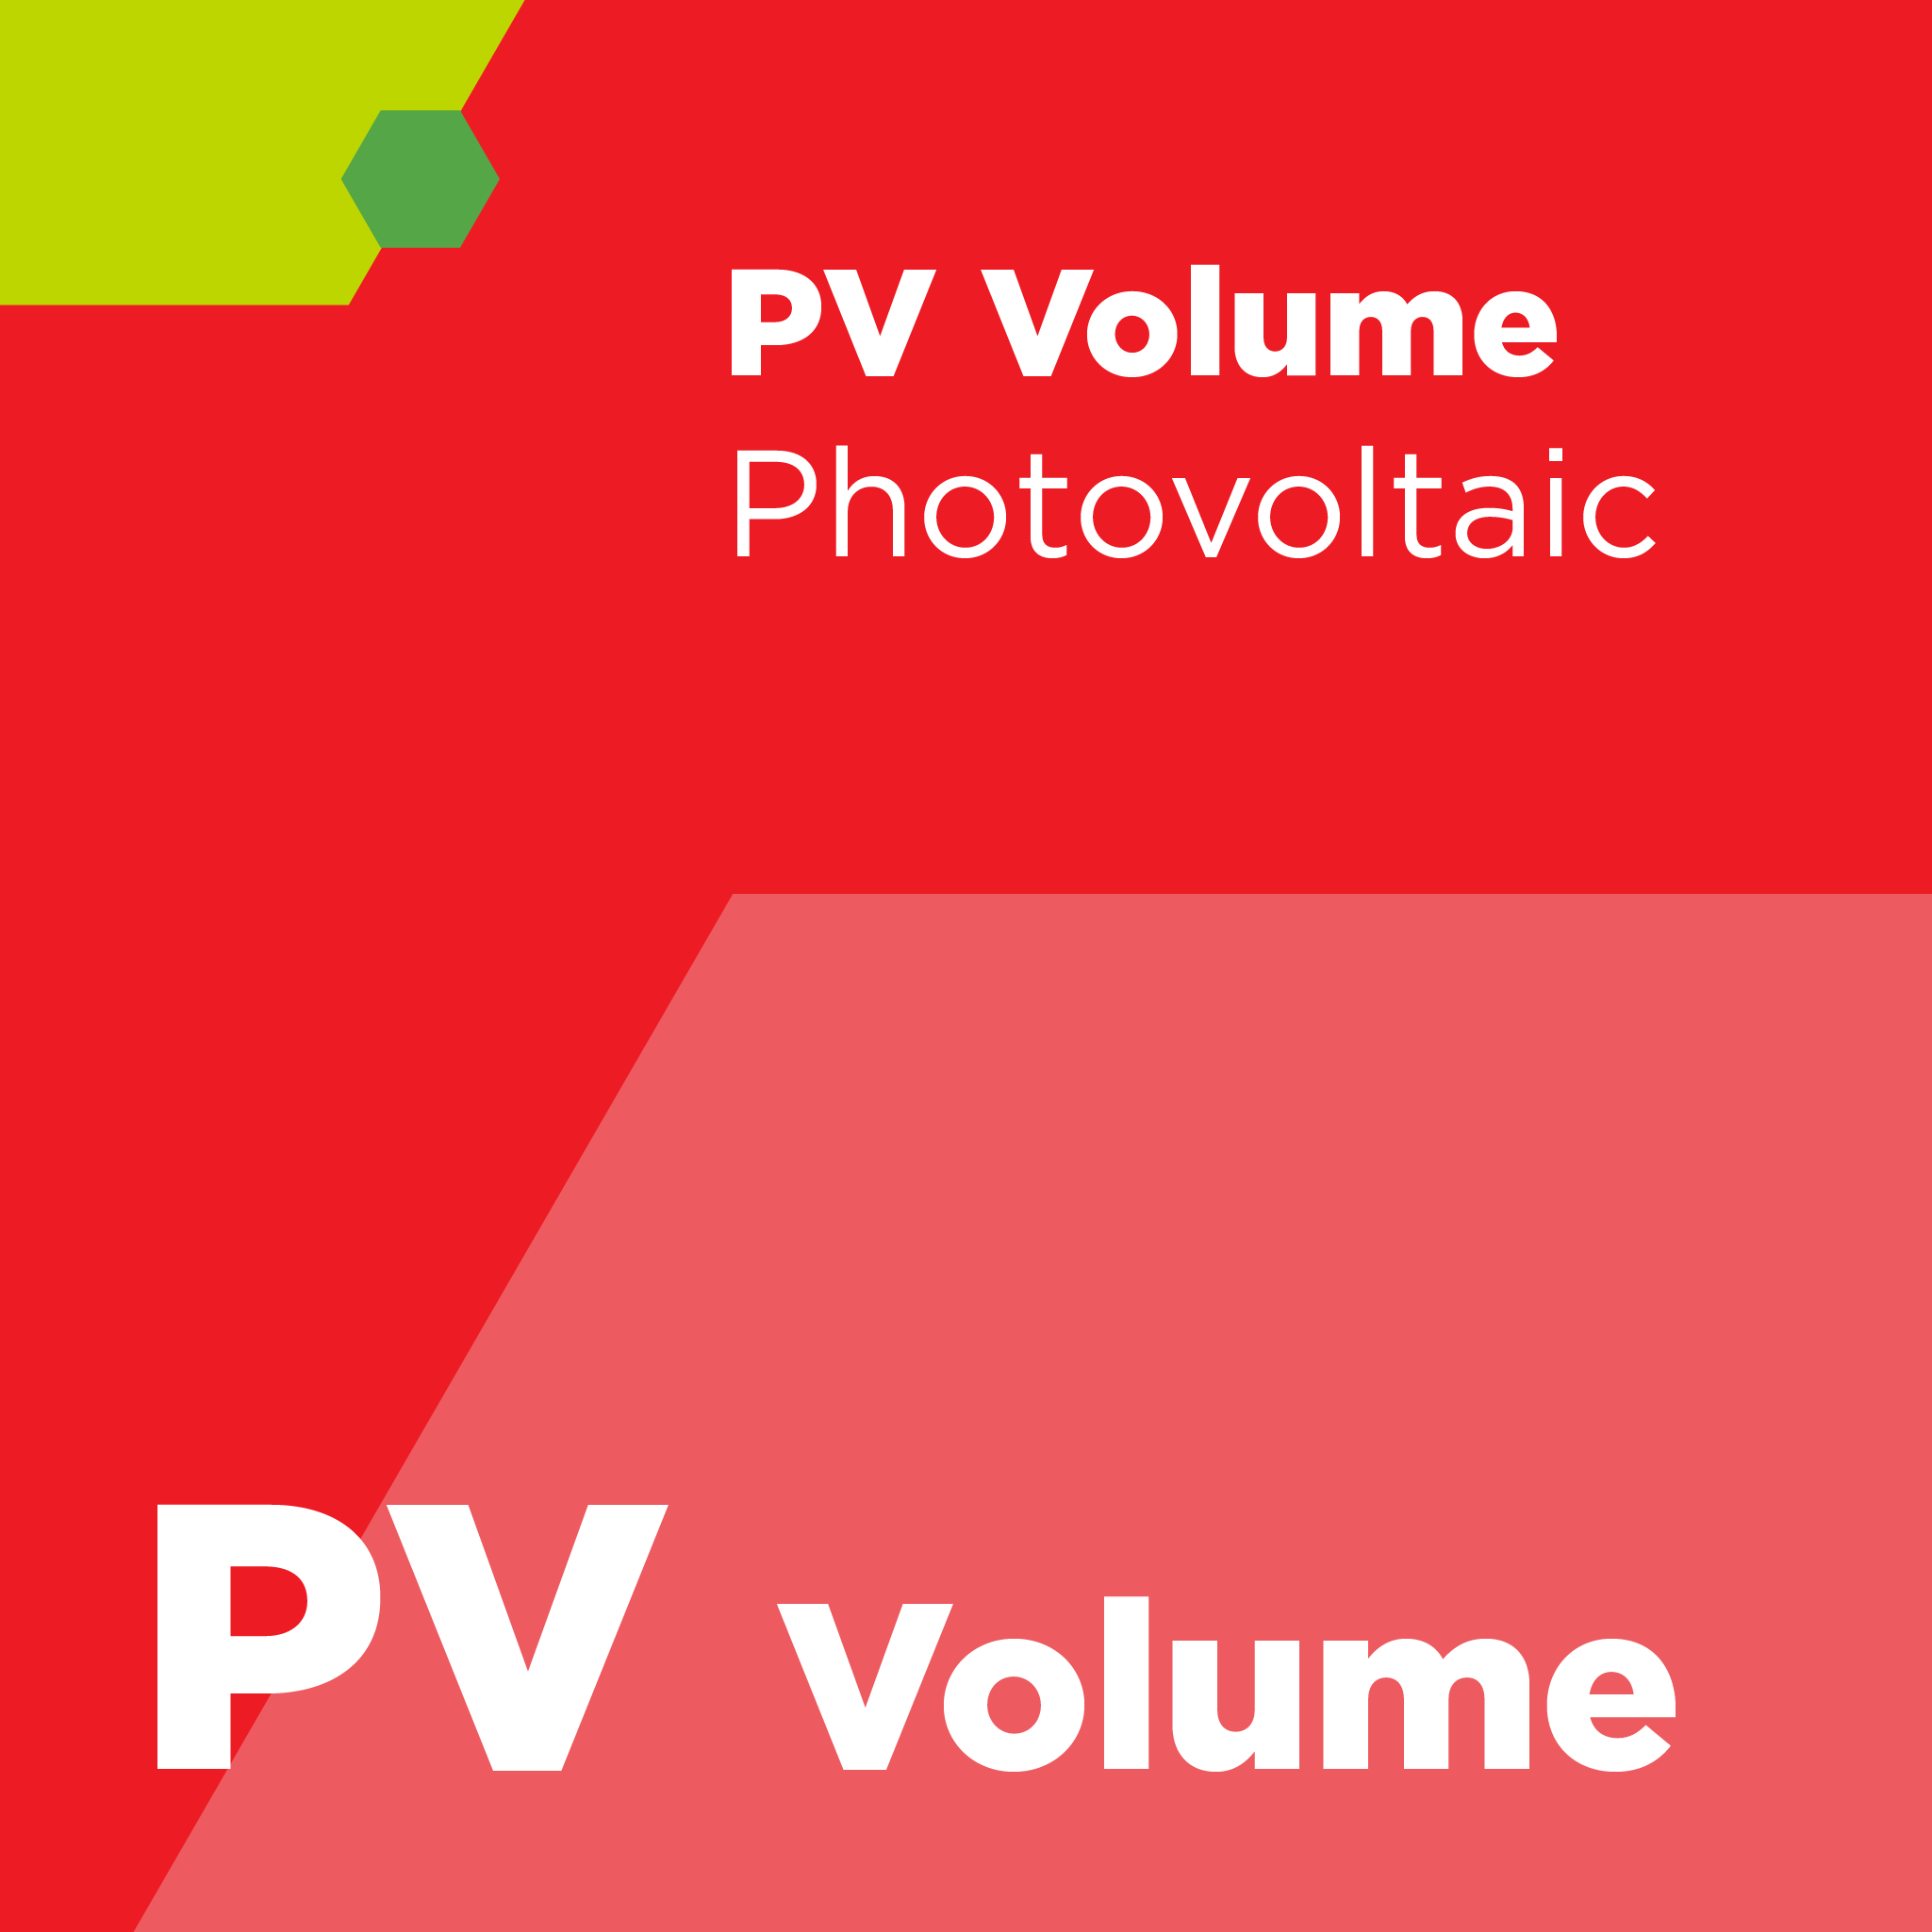 PV01300 - SEMI PV13 - 渦電流センサを用いたシリコンウェーハ，インゴット，およびブリックの過剰電荷キャリア再結合ライフタイムの非接触測定に関する試験方法